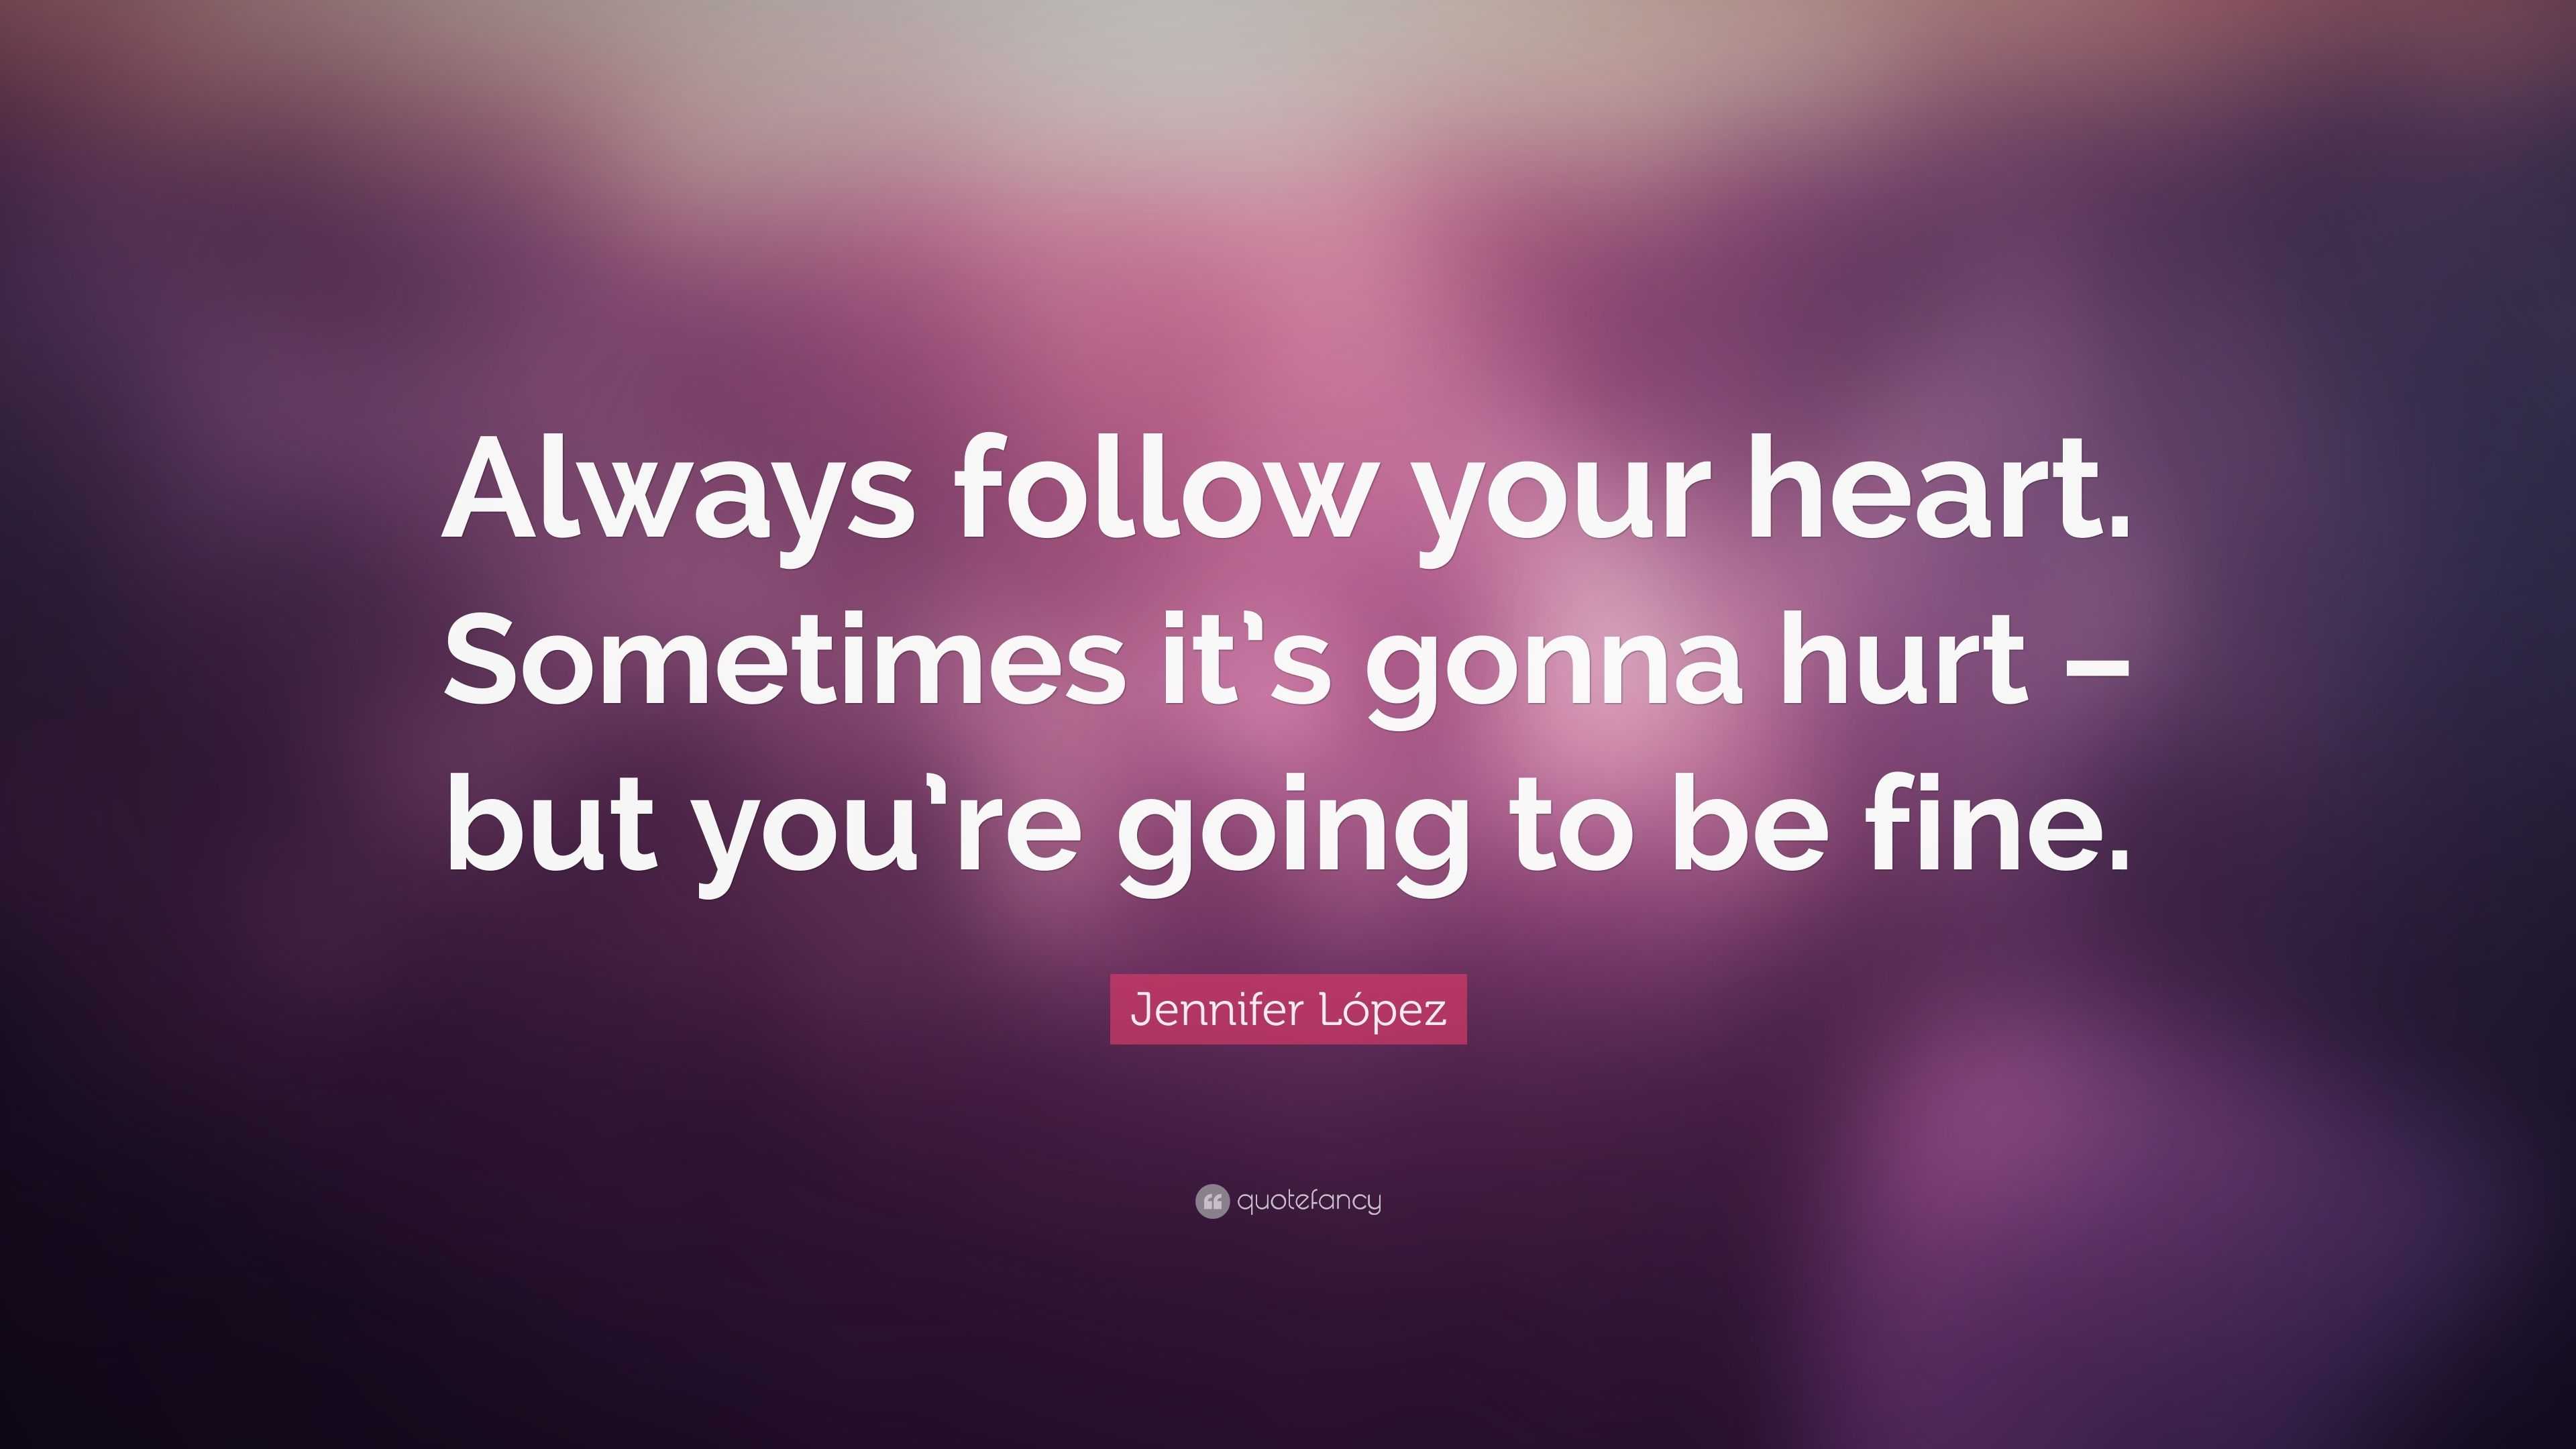 Jennifer López Quote: “Always follow your heart. Sometimes it’s gonna ...